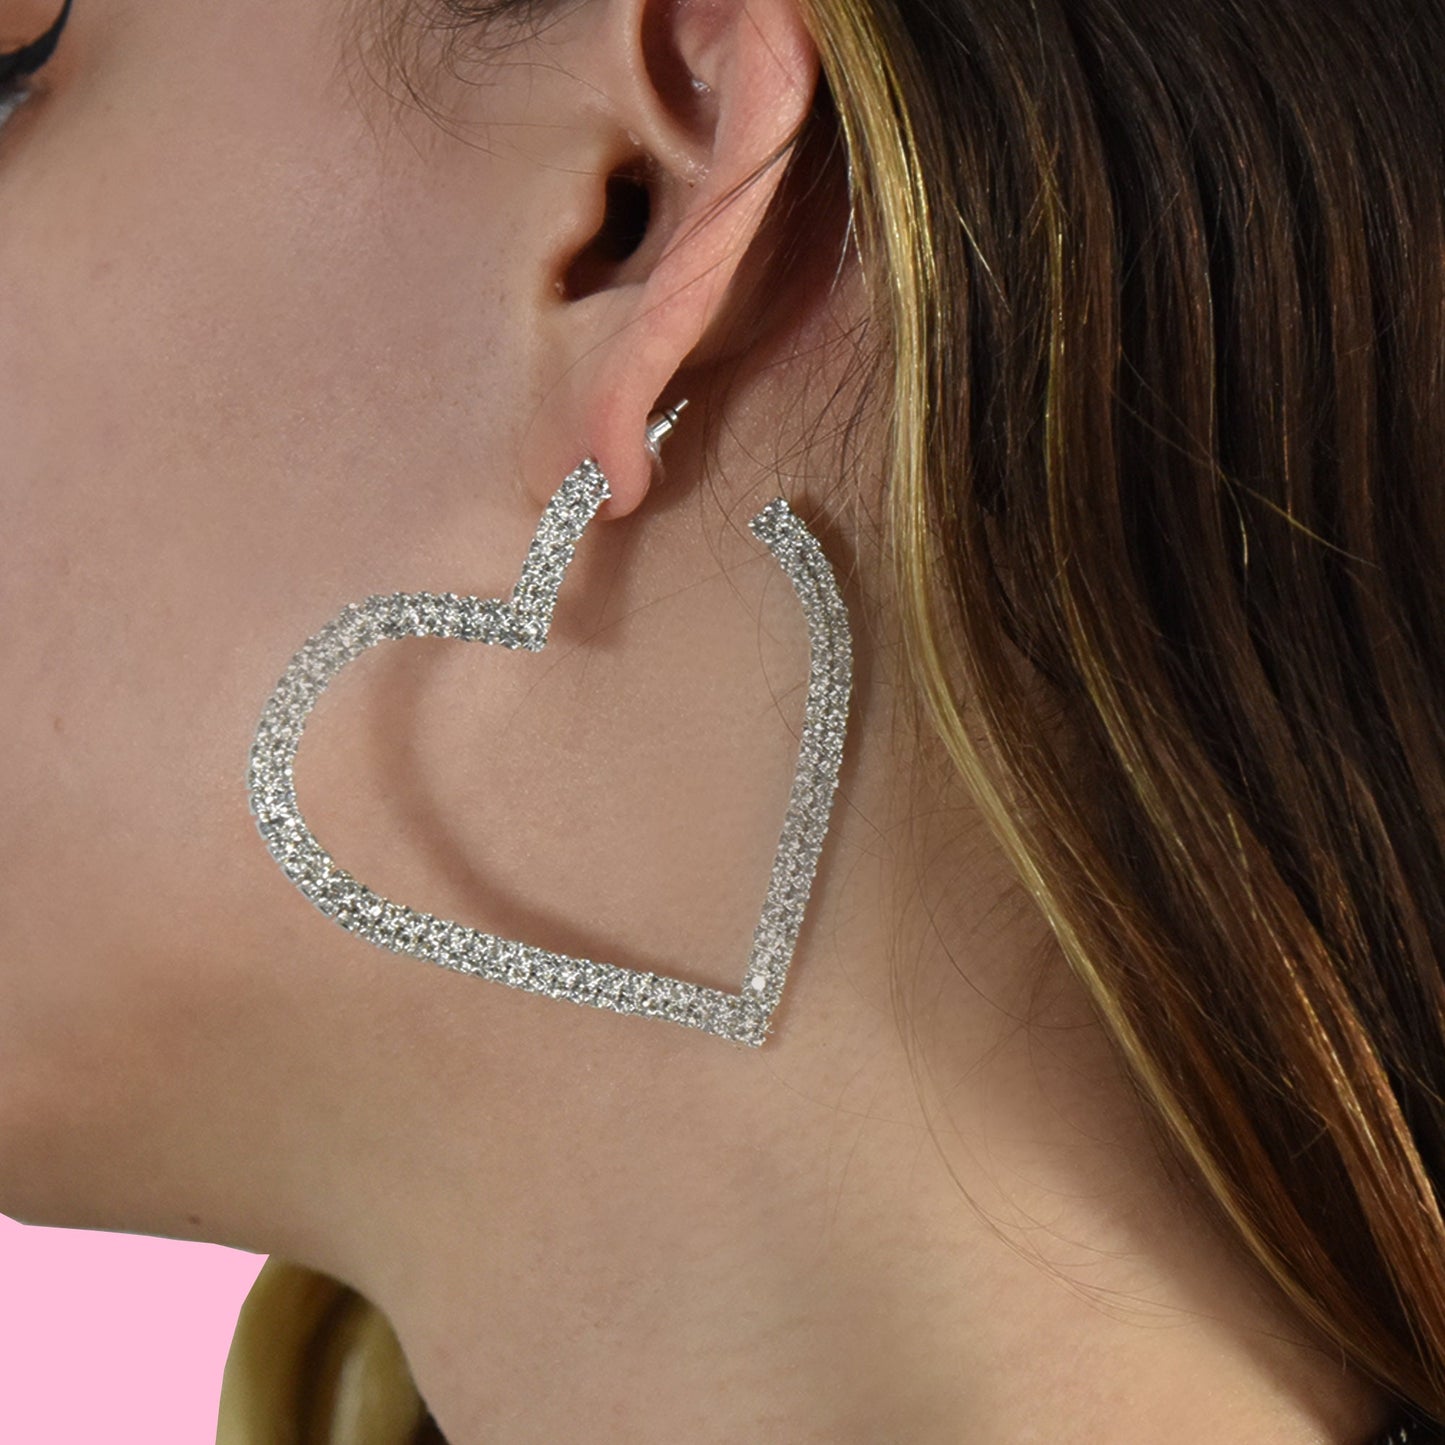 Adore Me Diamond Heart Hoop Earrings: Silver